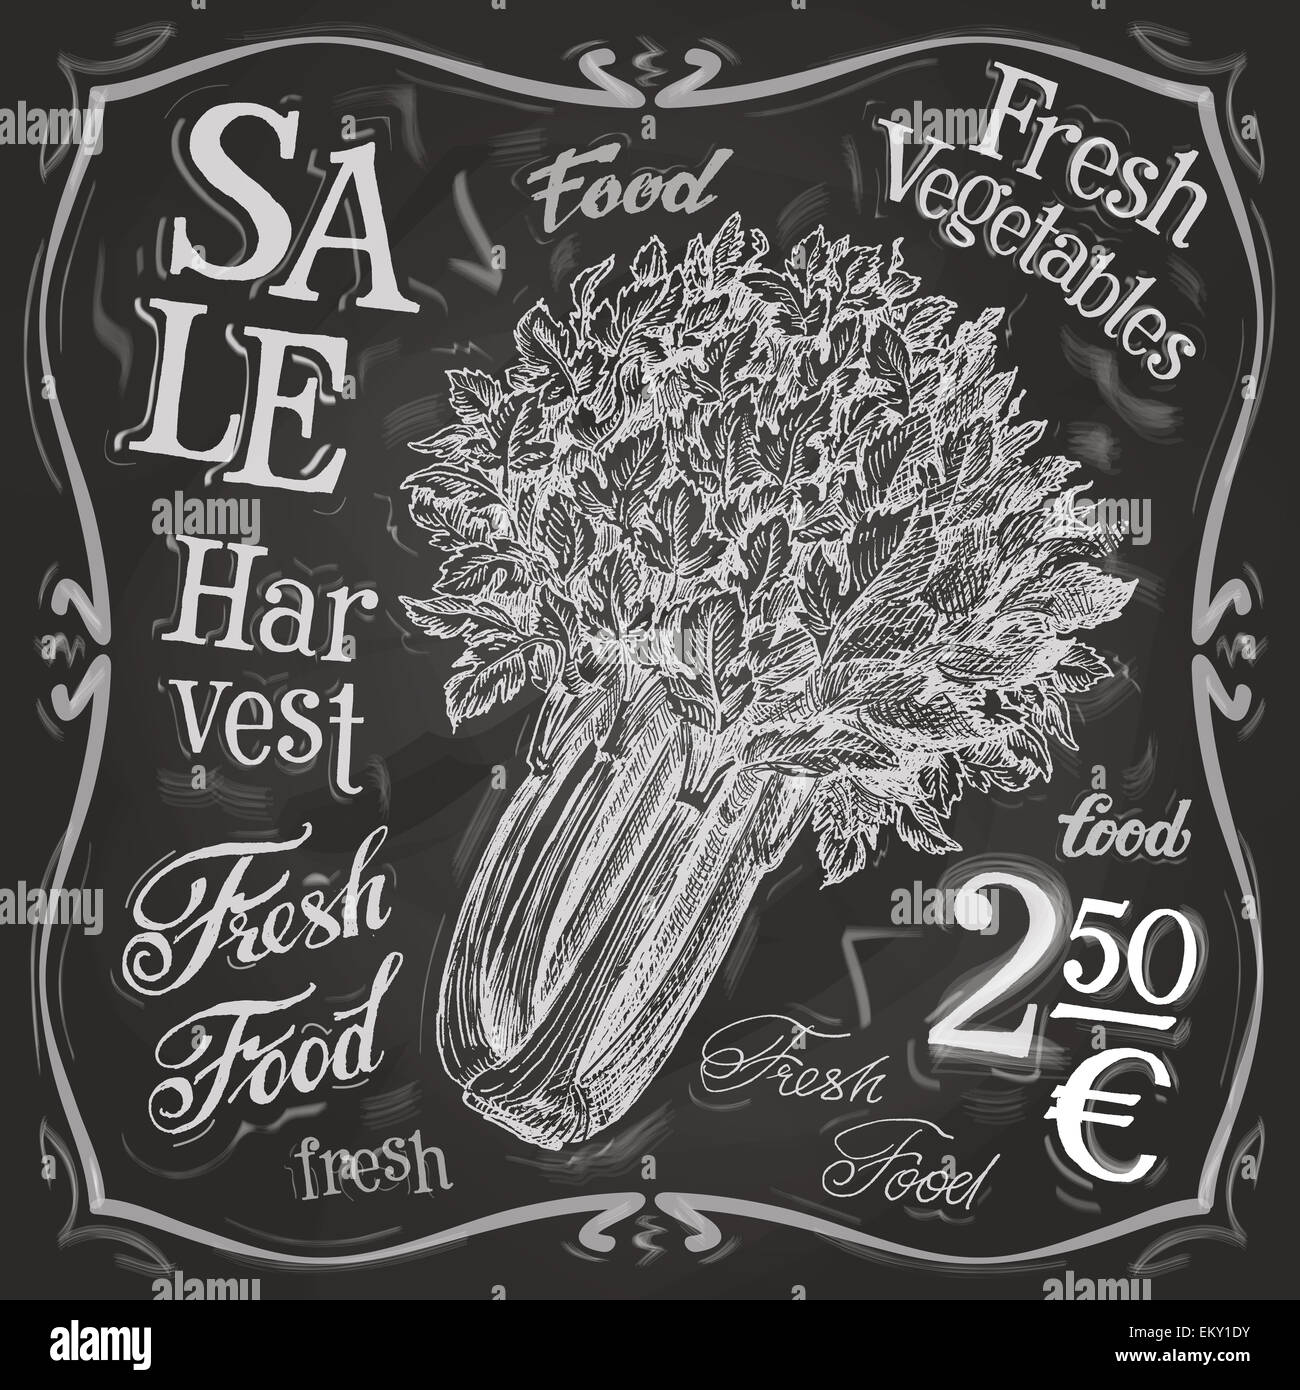 celery stalk vector logo design template. fresh vegetables, food or menu board icon. Stock Photo